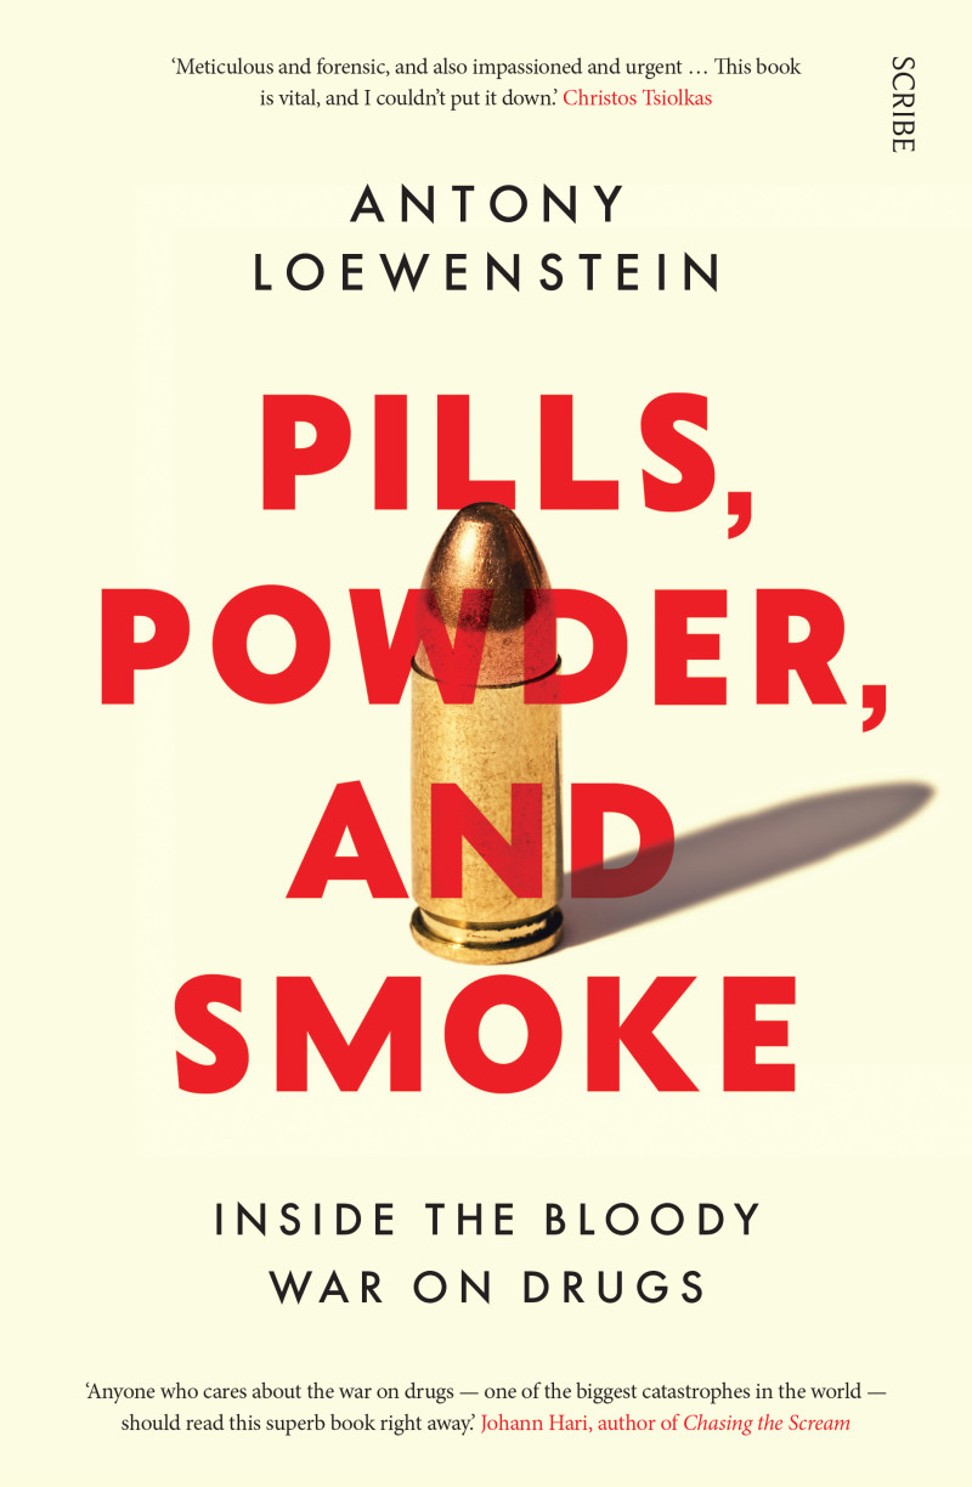 The cover of Antony Loewenstein’s book.